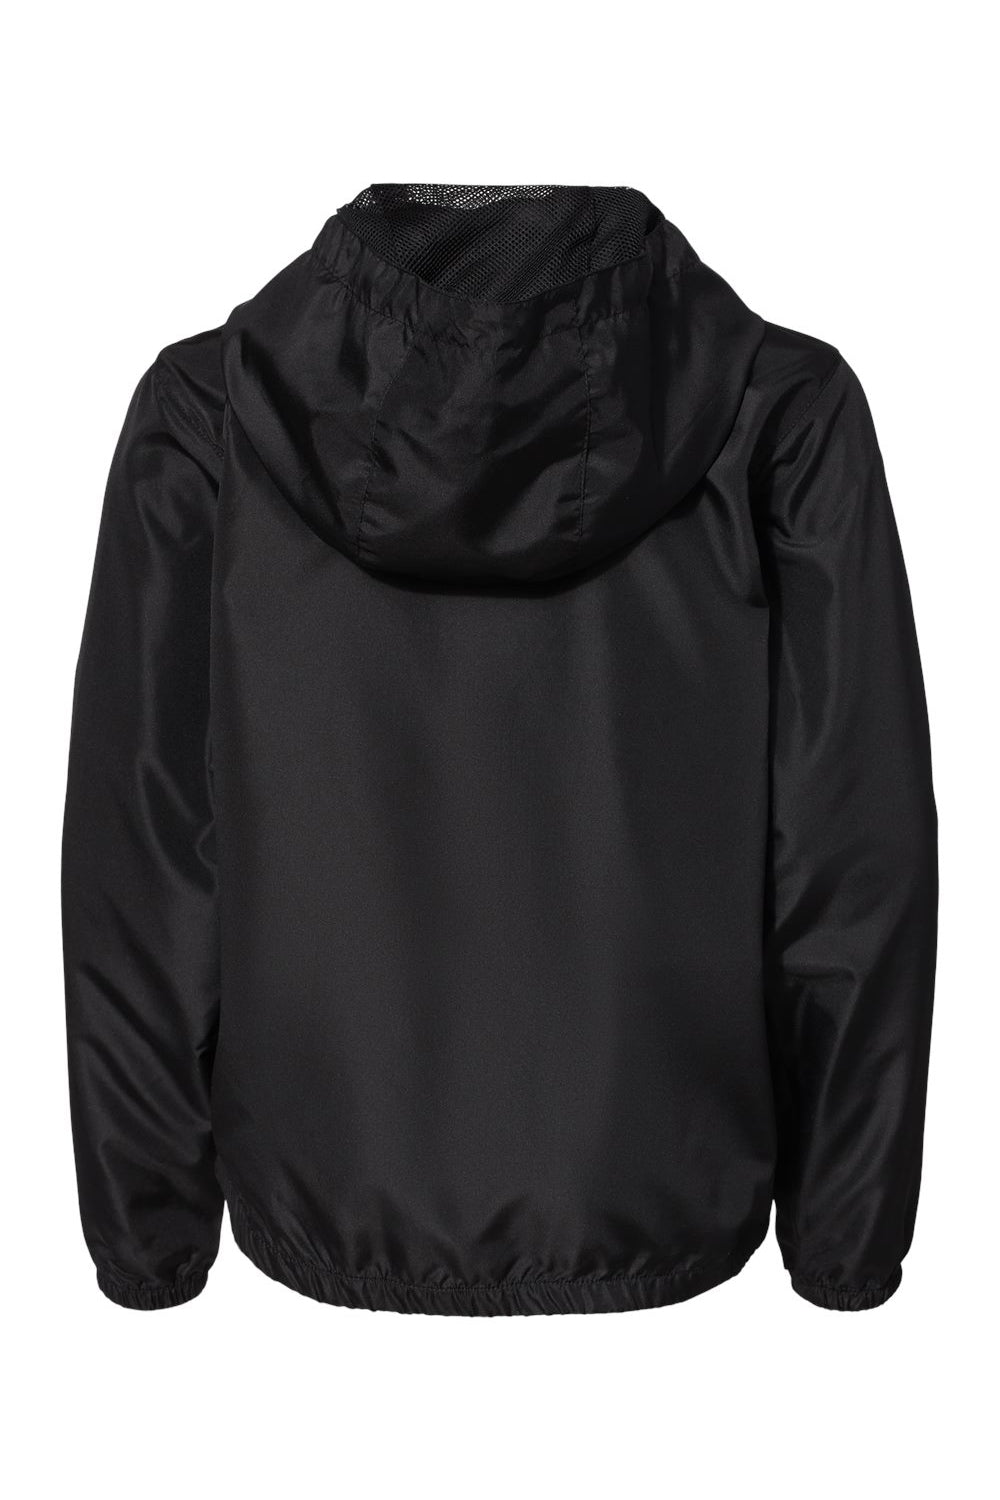 Independent Trading Co. EXP24YWZ Youth Full Zip Windbreaker Hooded Jacket Black Flat Back